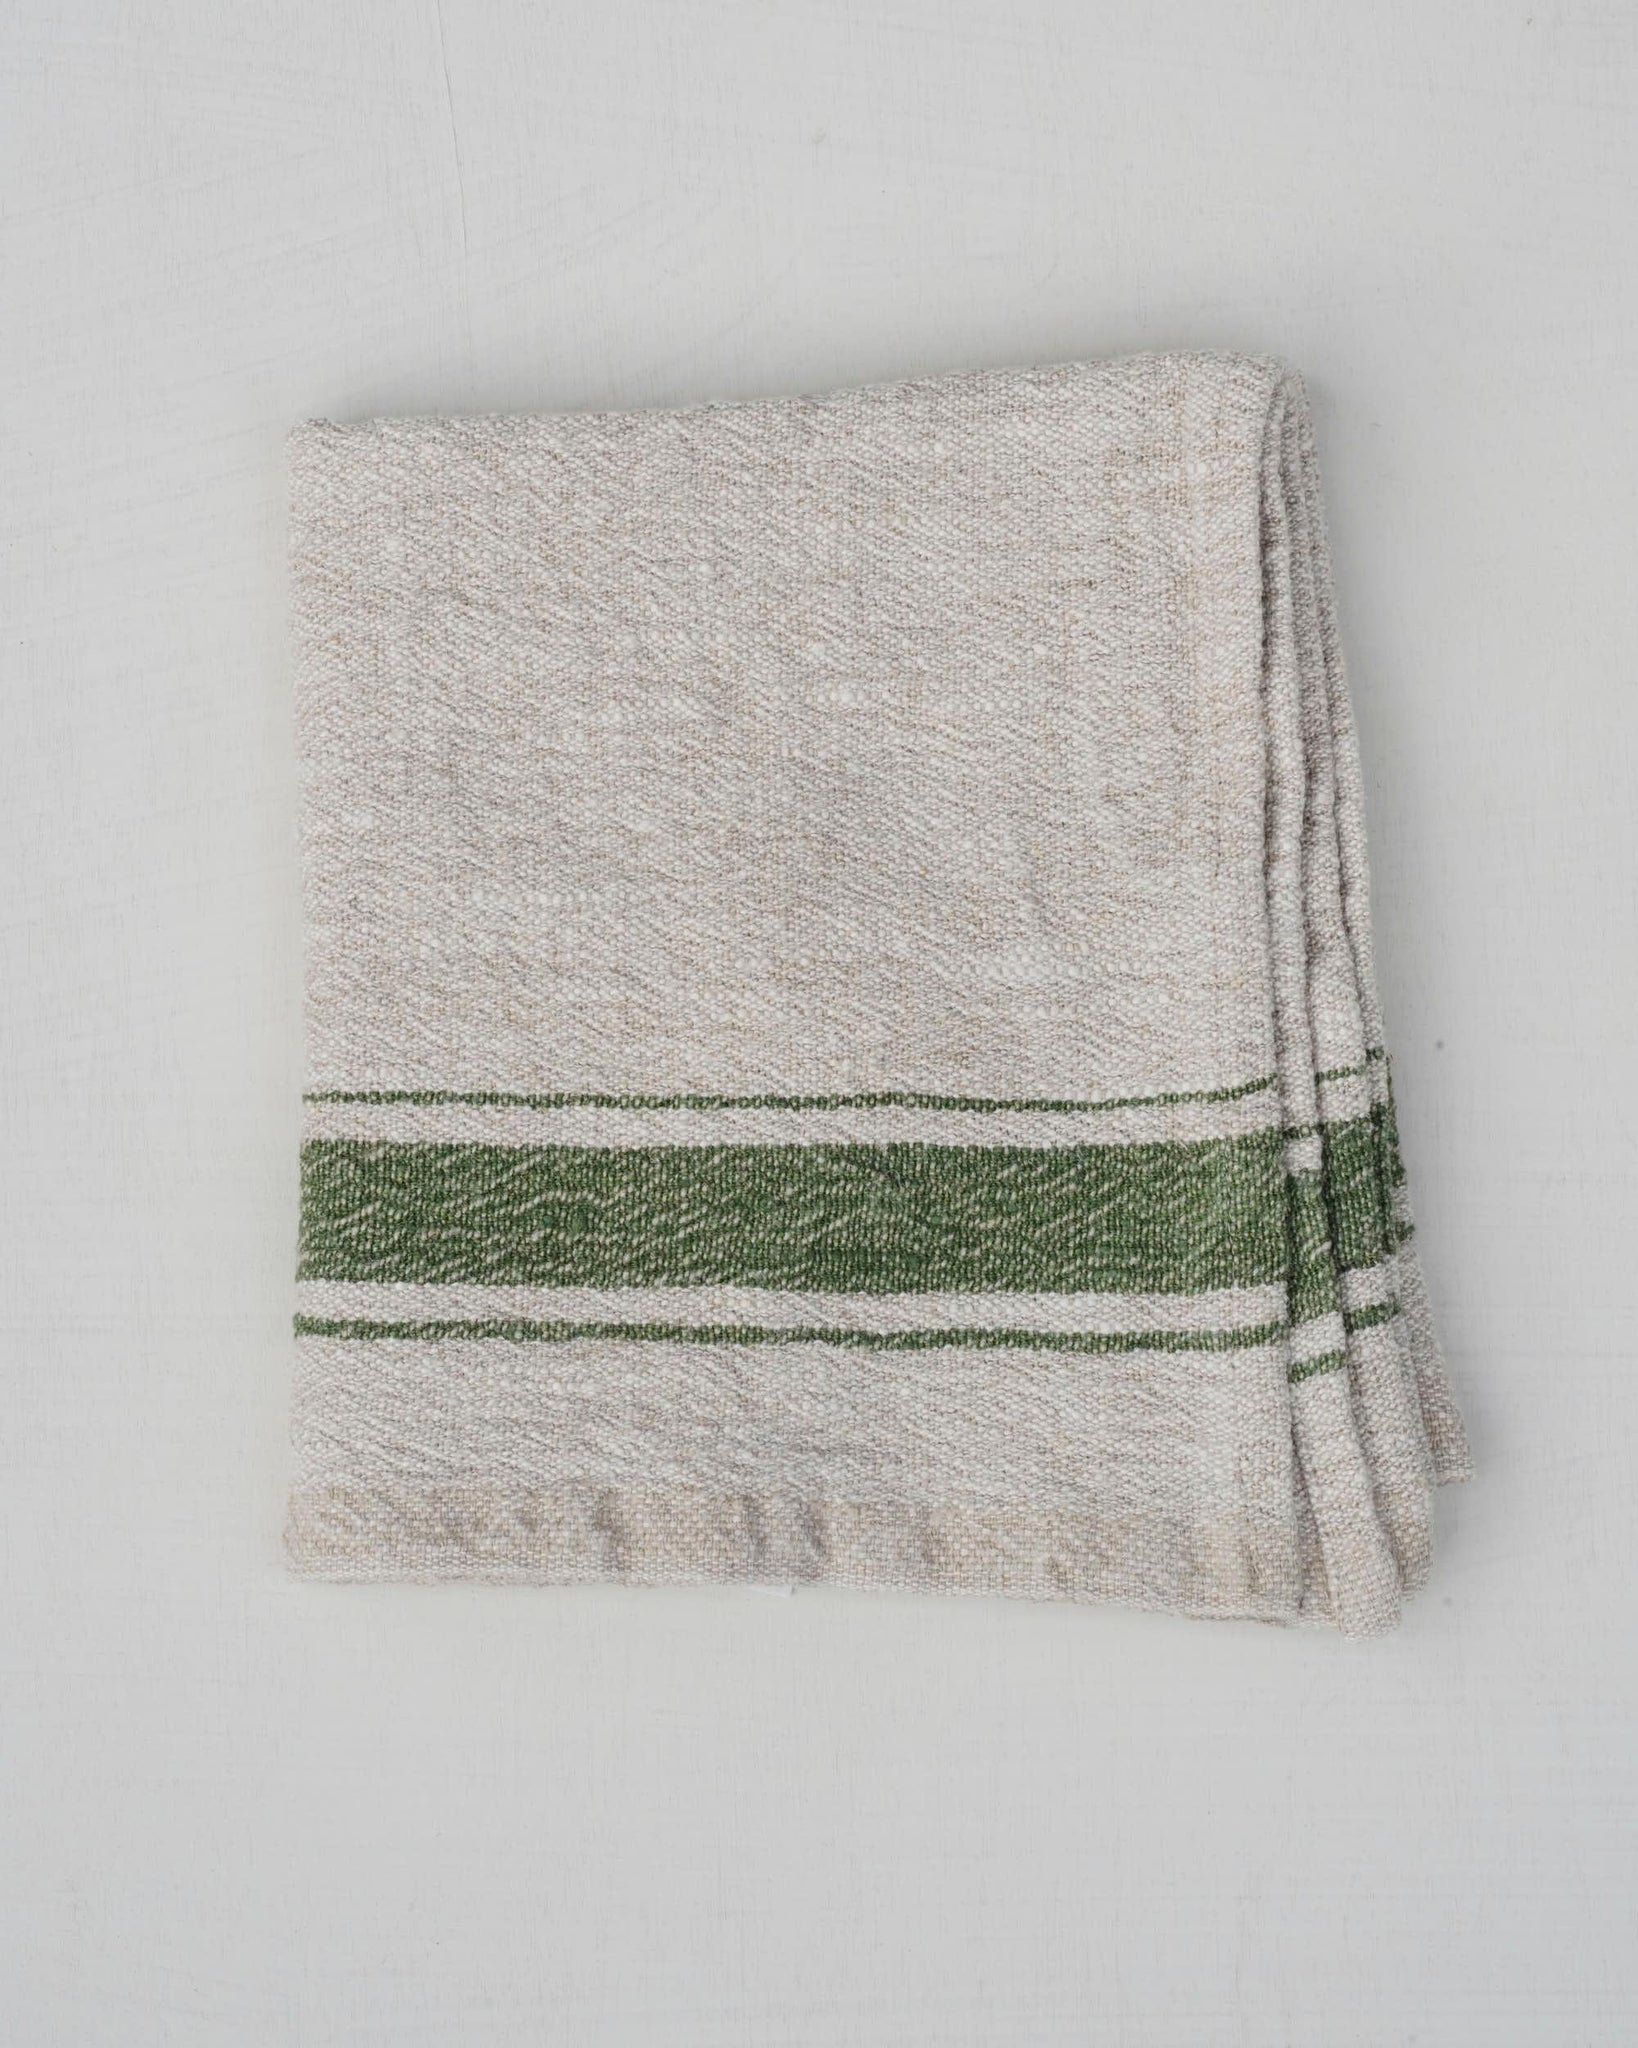 Vintage Striped Linen Kitchen Towels - Folkways